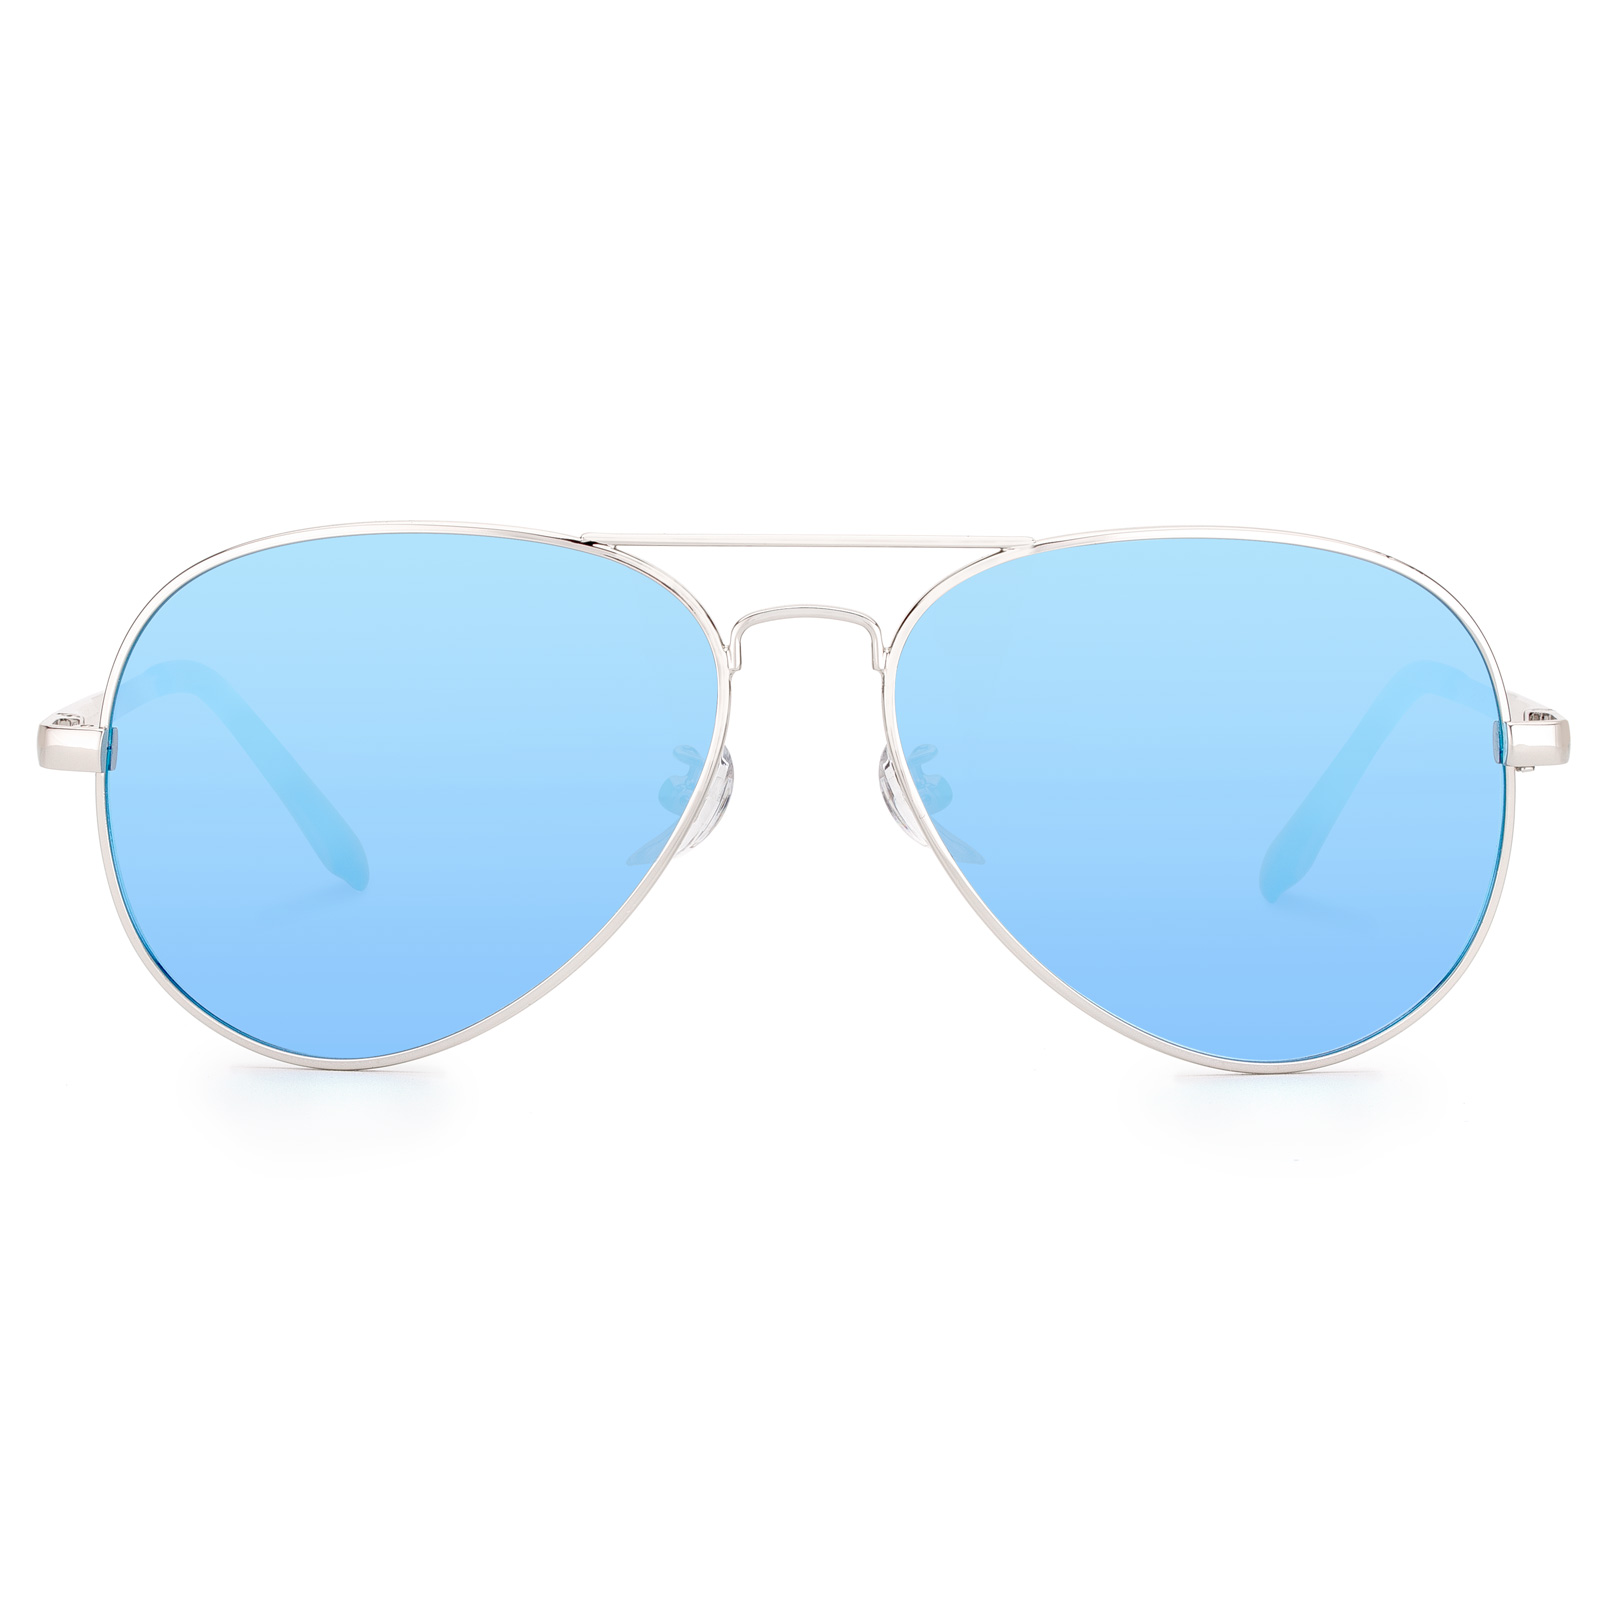 Aviator Sunglasses Night-Vision Driving Glasses Anti-Glare HD Sight Polarized Frame Ultra Light